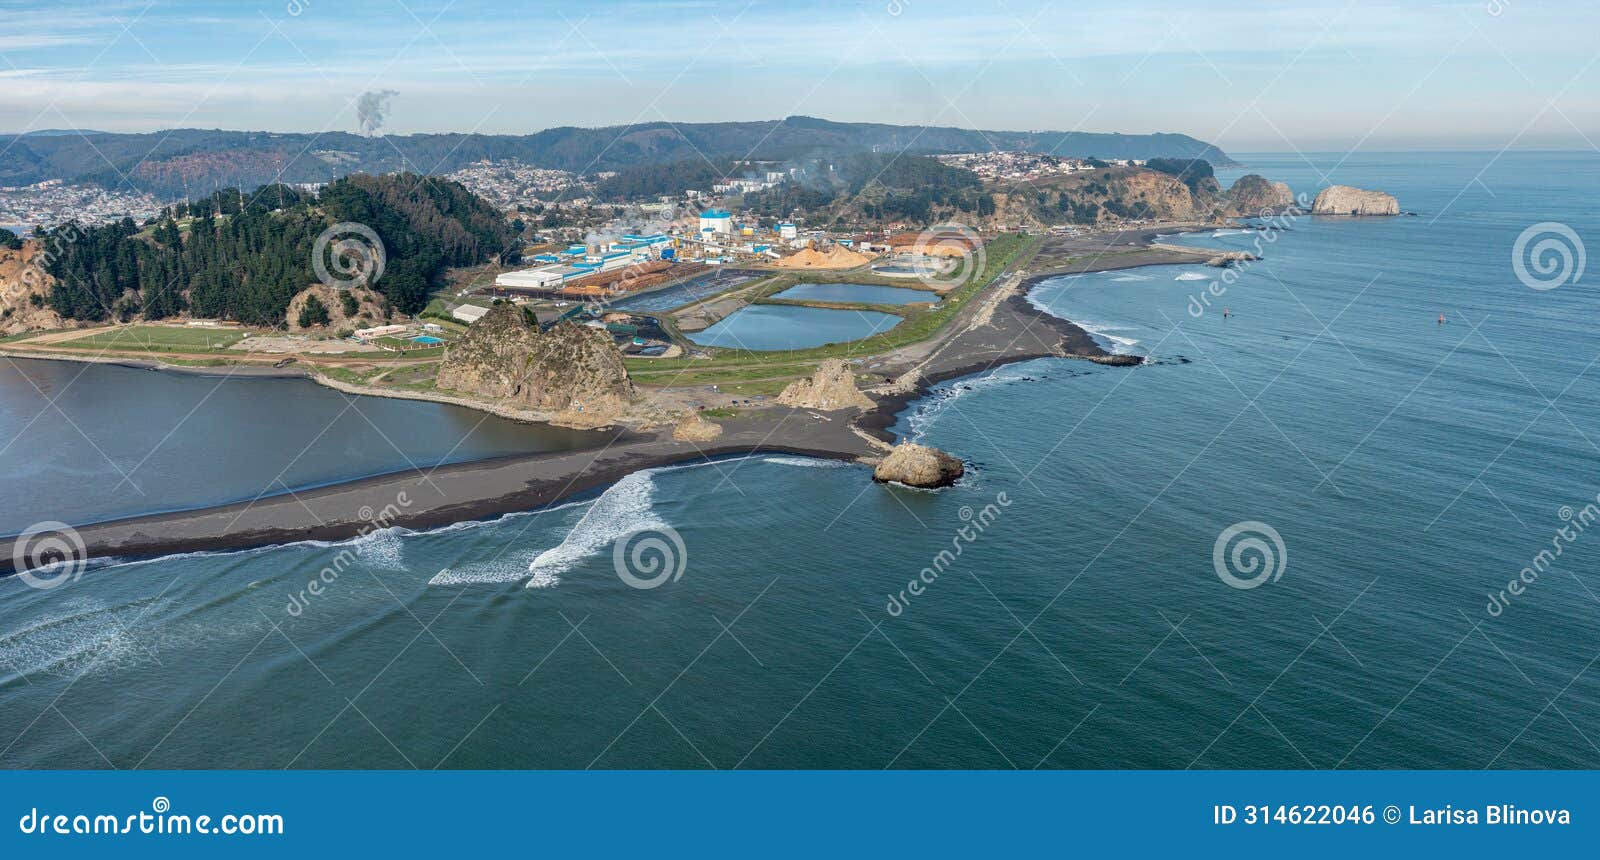 part of city constitucion chile and coastline pacific ocean, aerial view